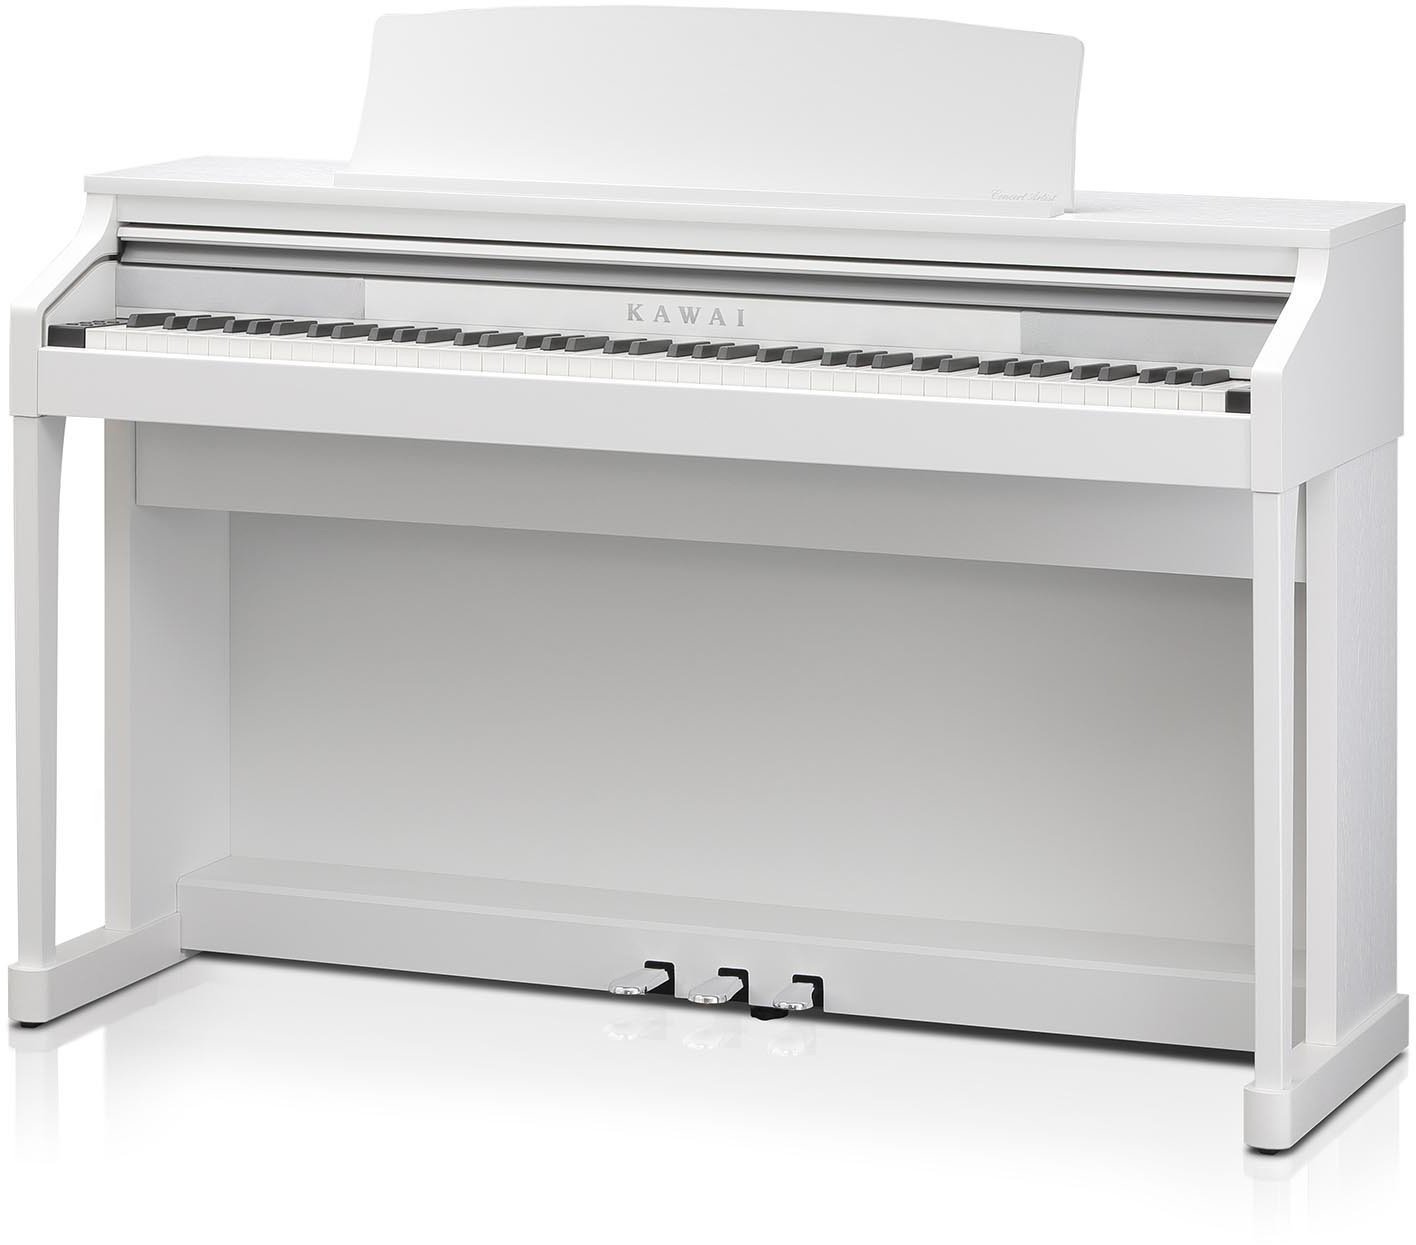 Digital Piano Kawai CA17 White